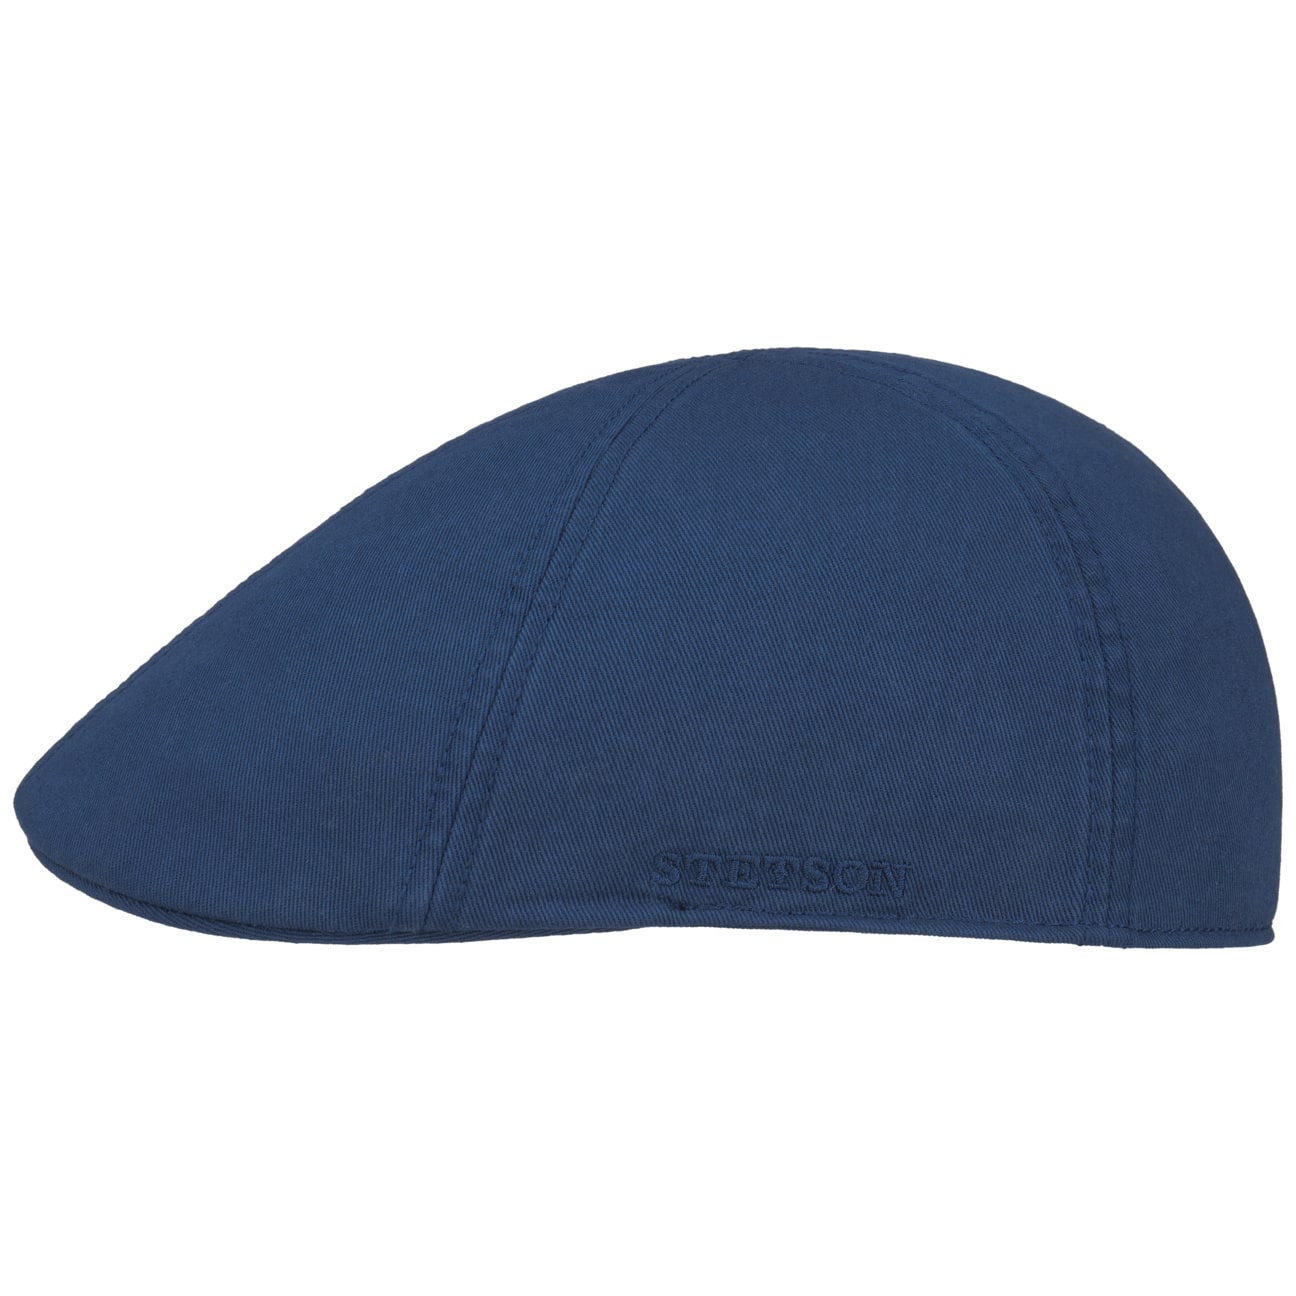 Stetson 6611105-23 Texas cotton blue flat cap gubbkeps